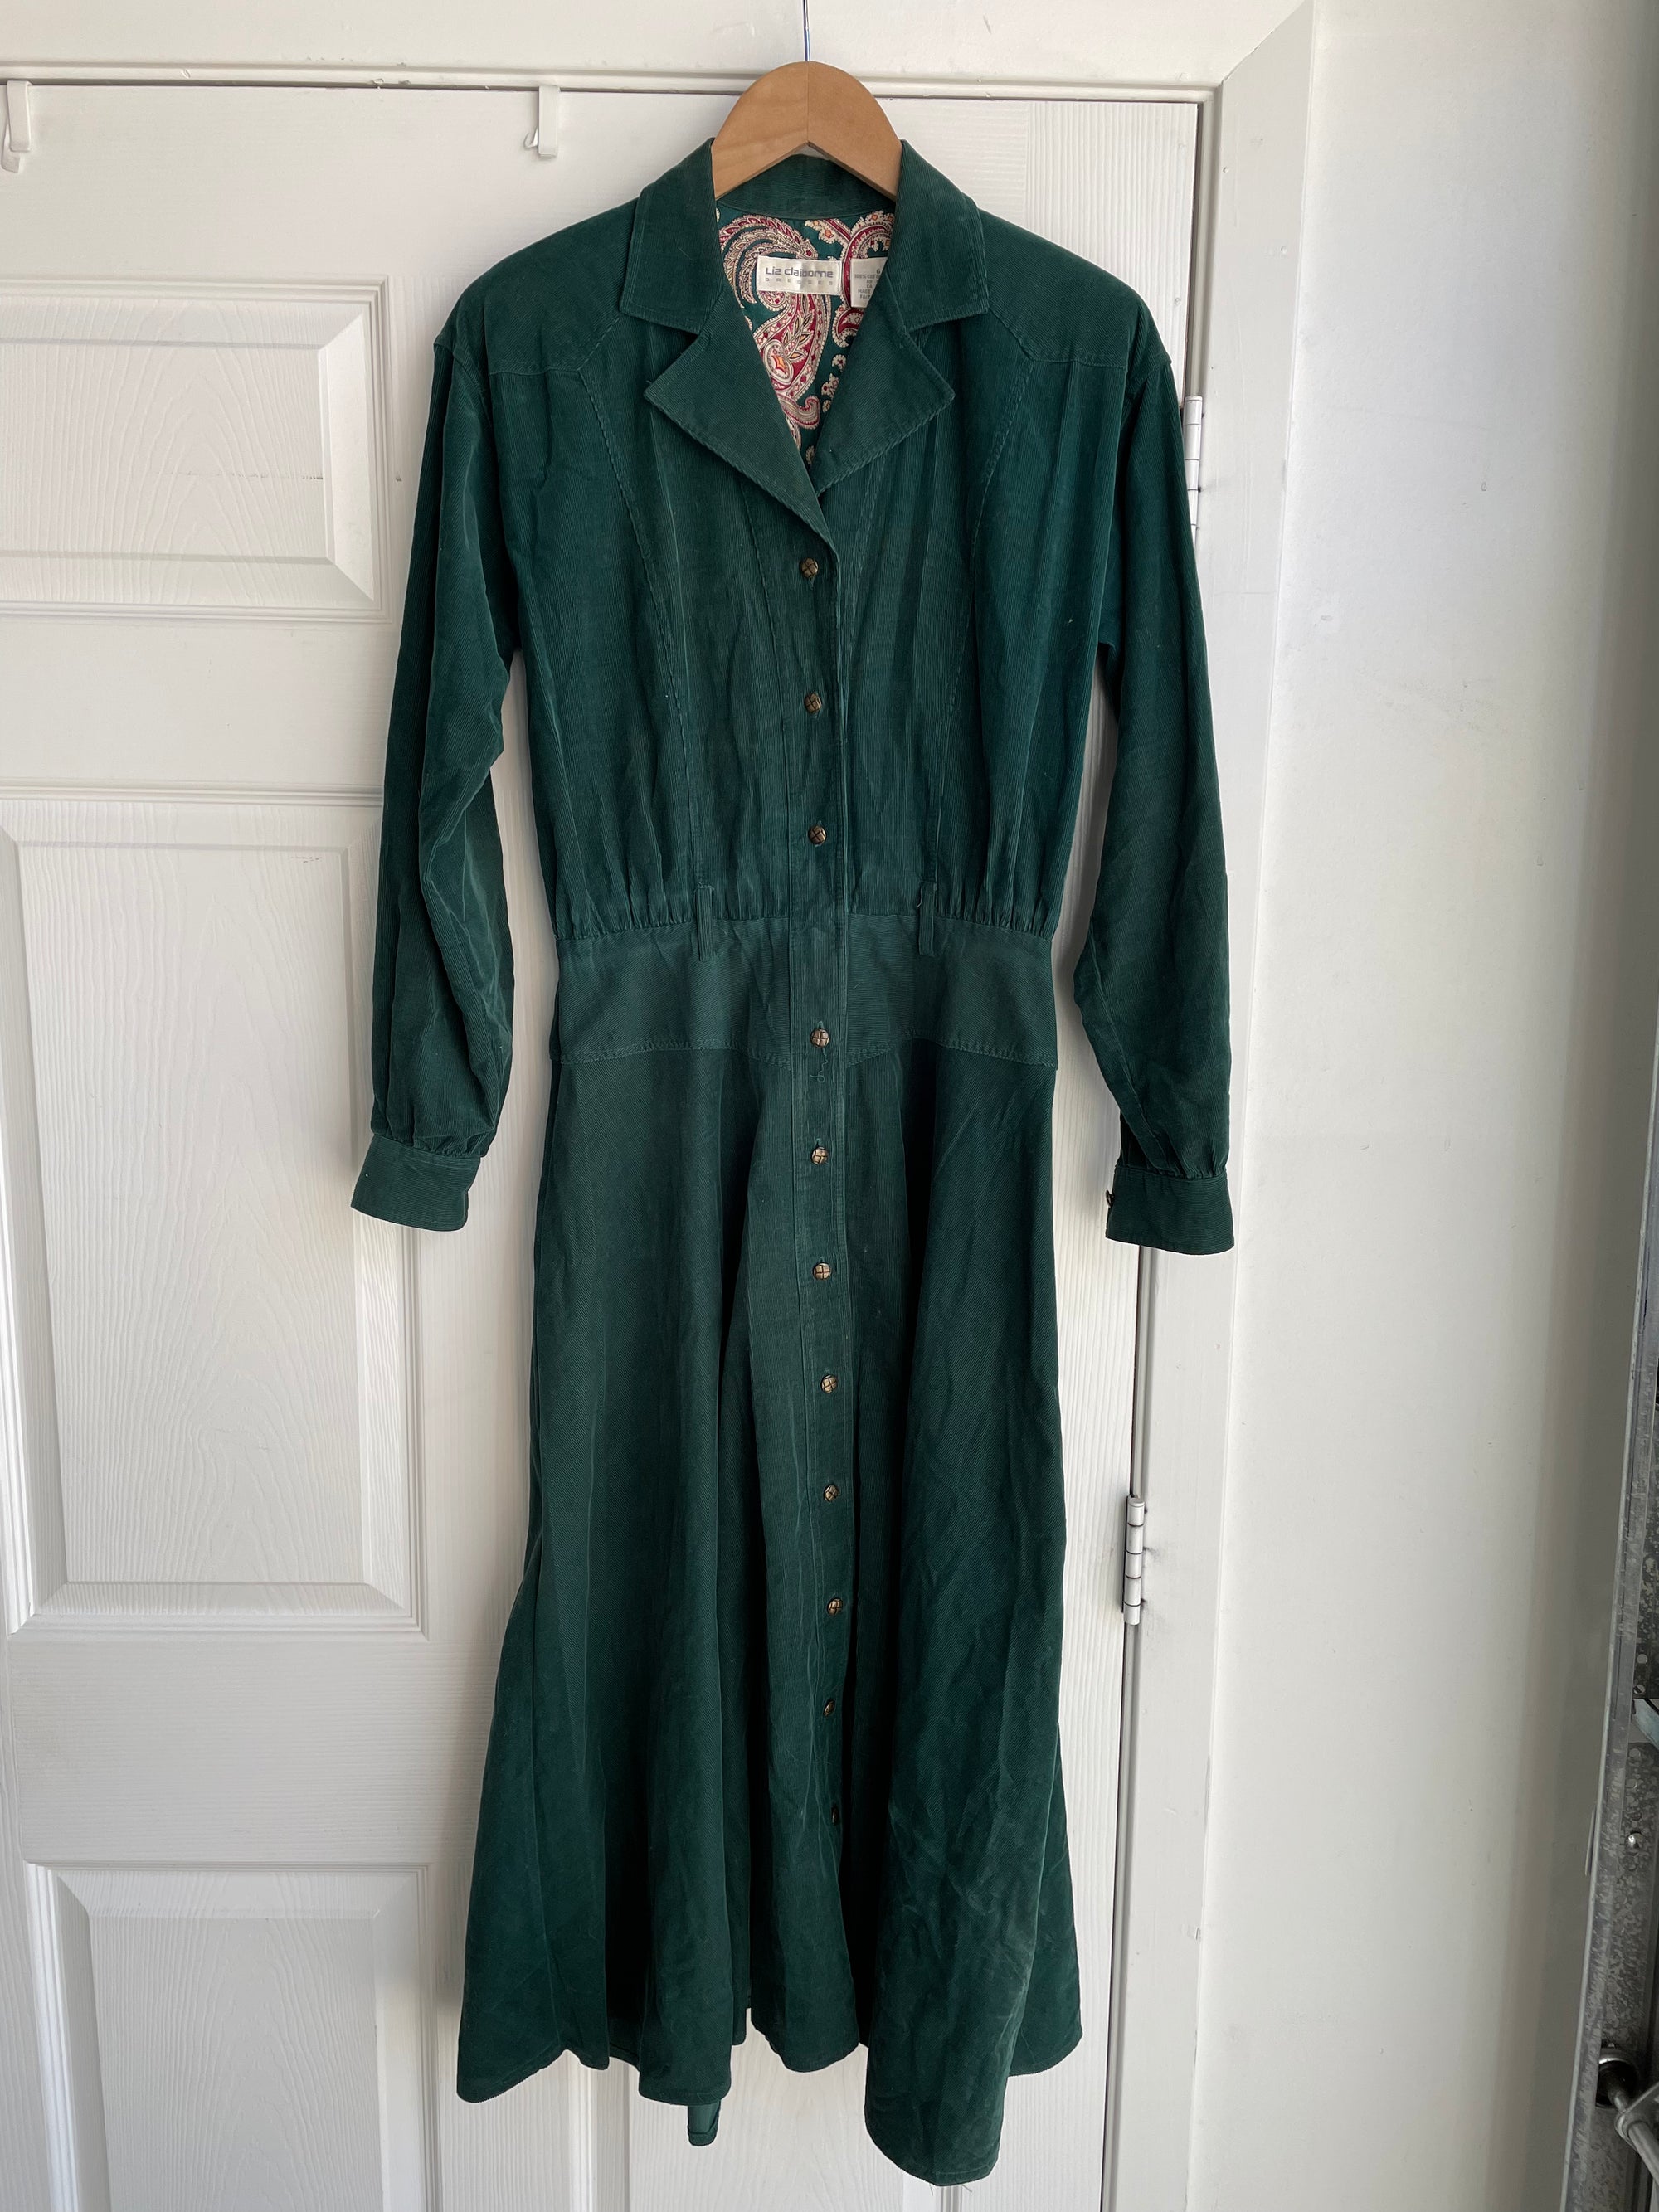 Vintage Green Corduroy Liz Clairborne Dress